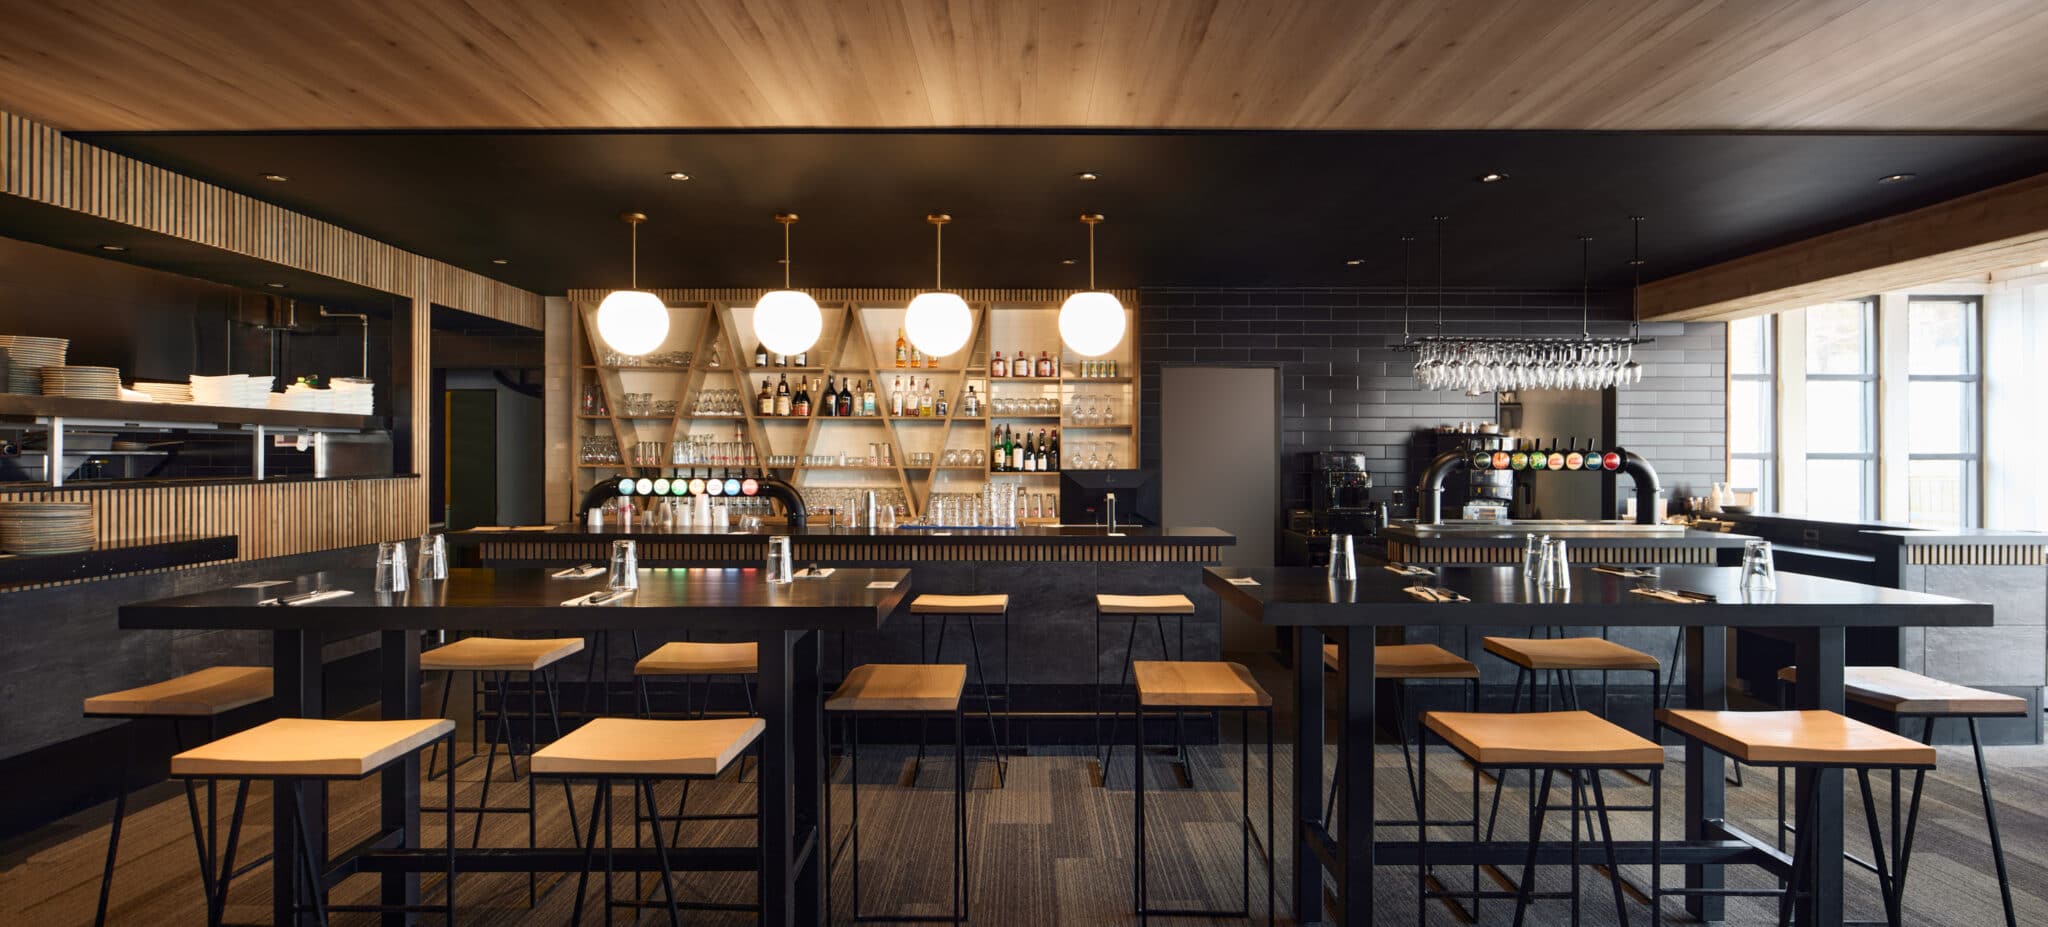 Corporate project - Bar Restaurant - La Débarque - Ski Shop in Bromont by VAD. Commercial Interior Designers